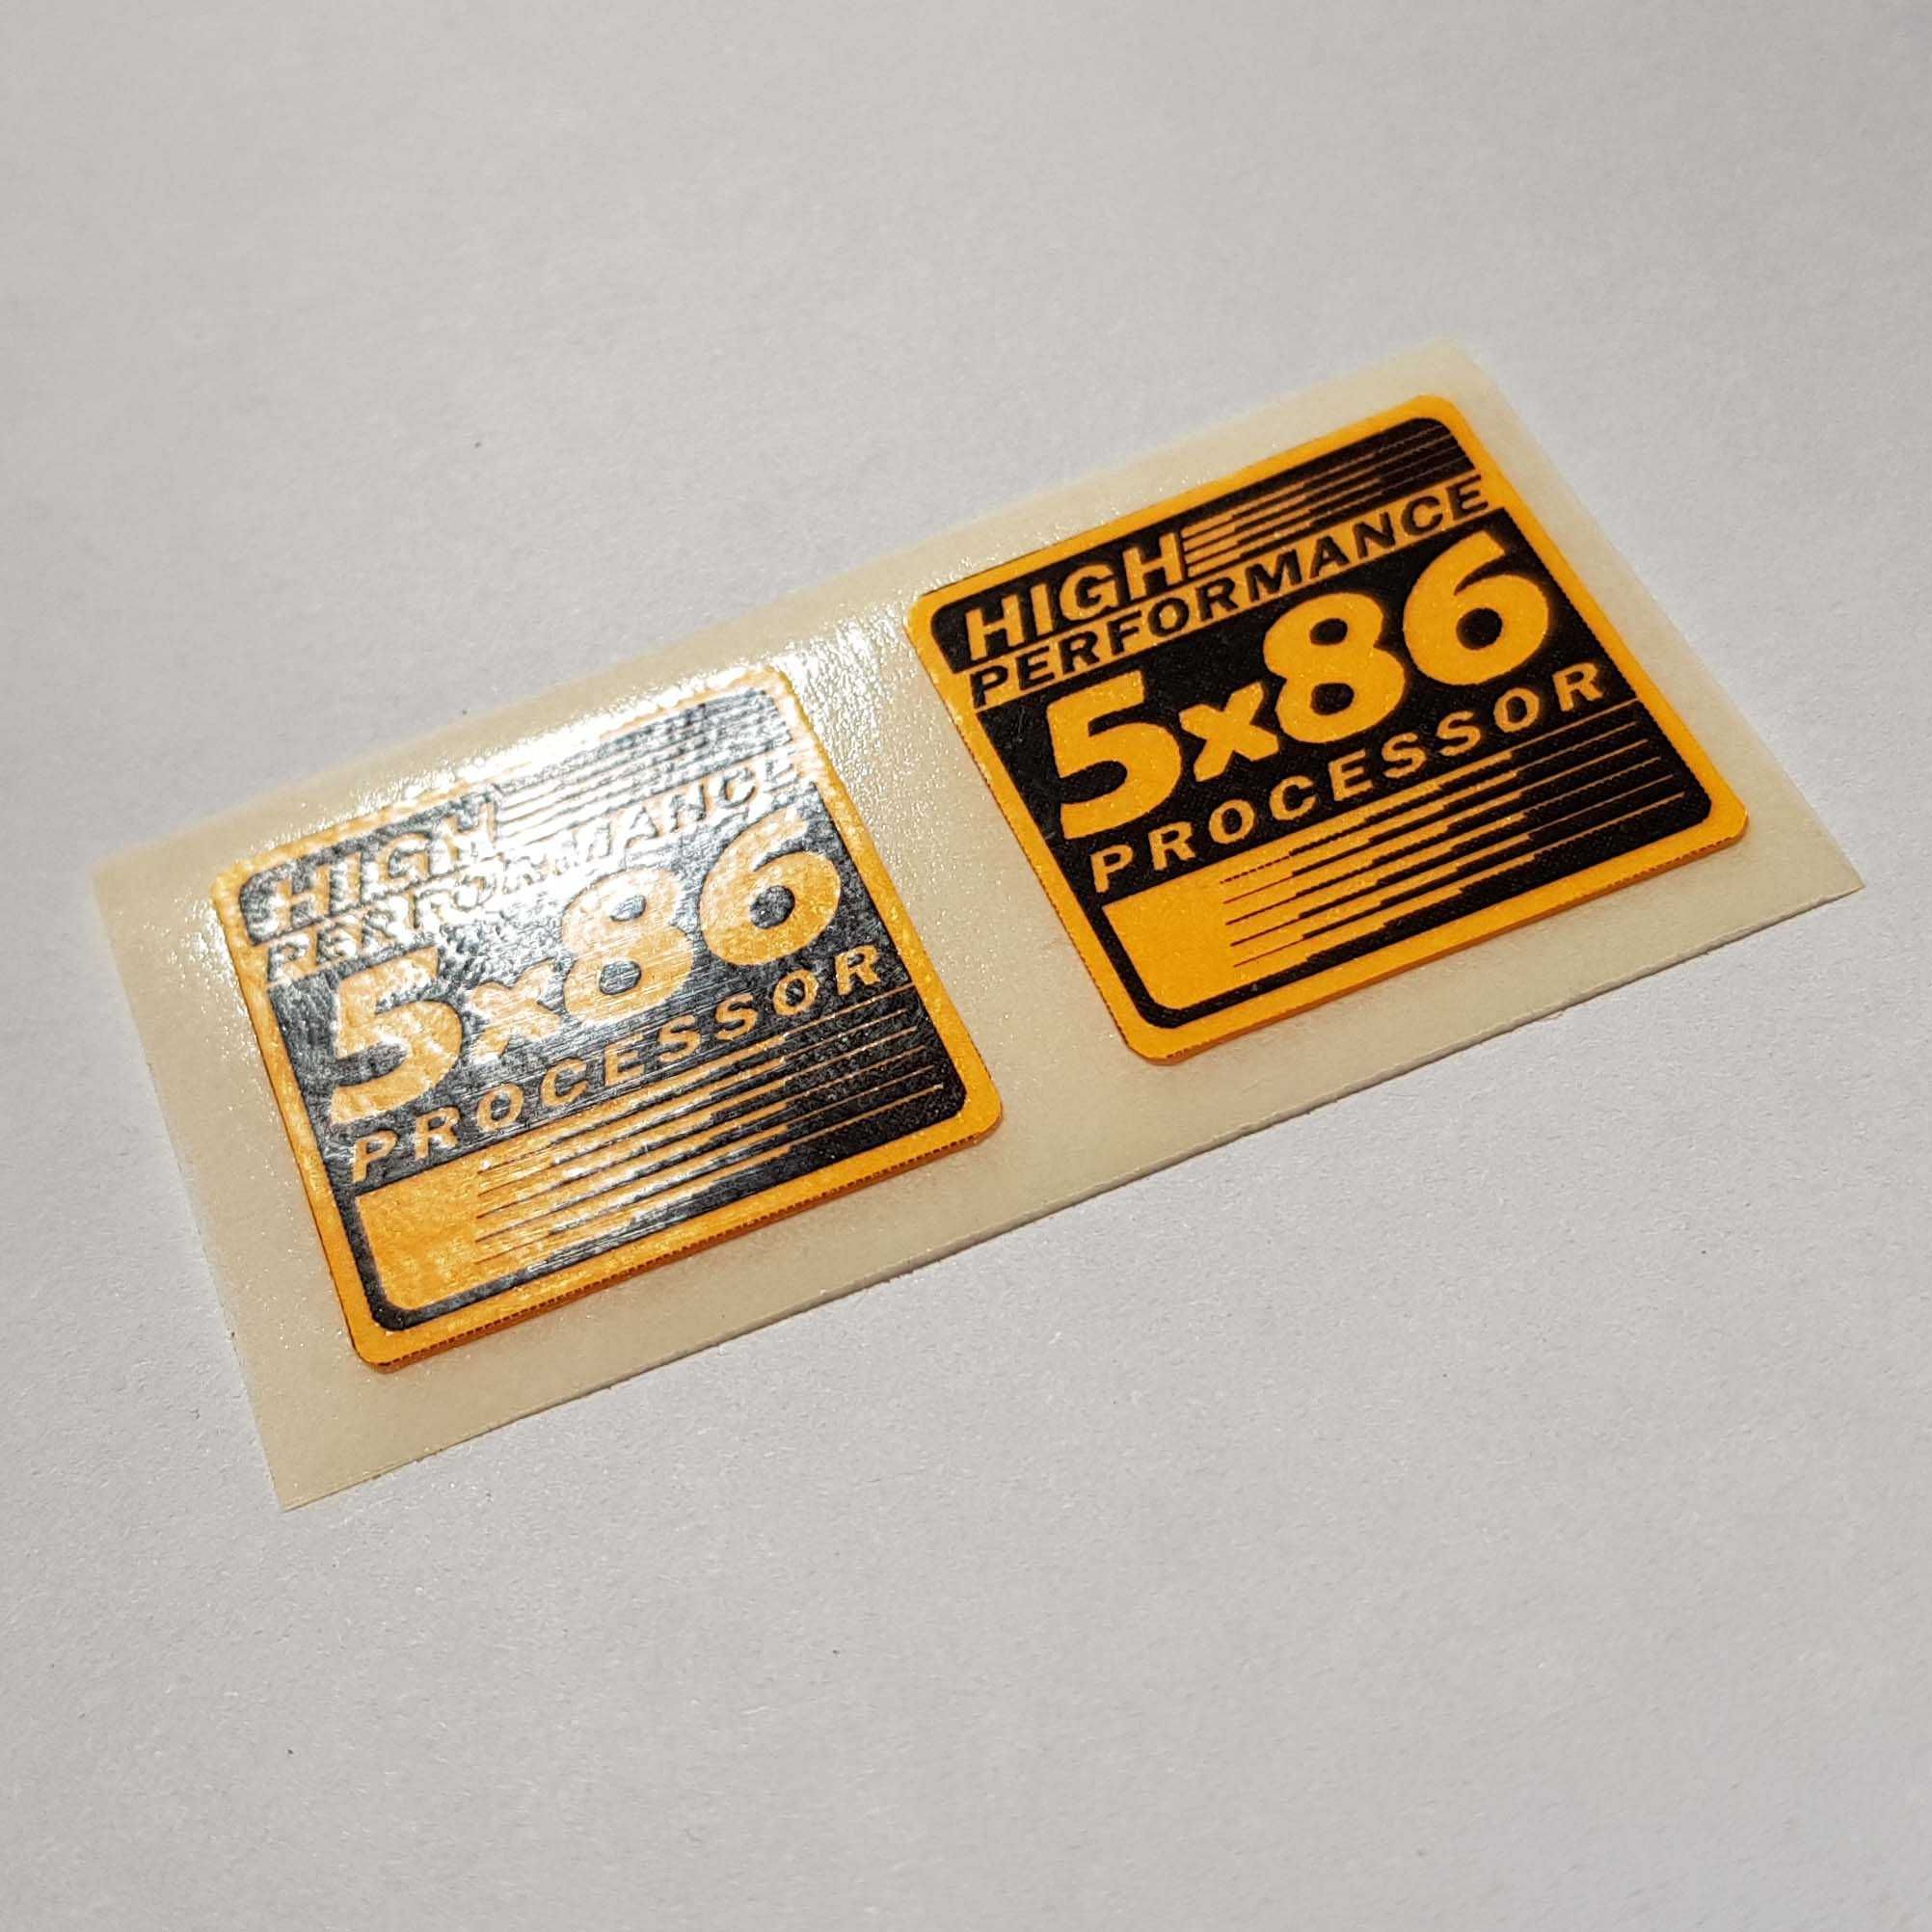 586 5x86 processor Наклейки на старий ретро компьютер PC sticker